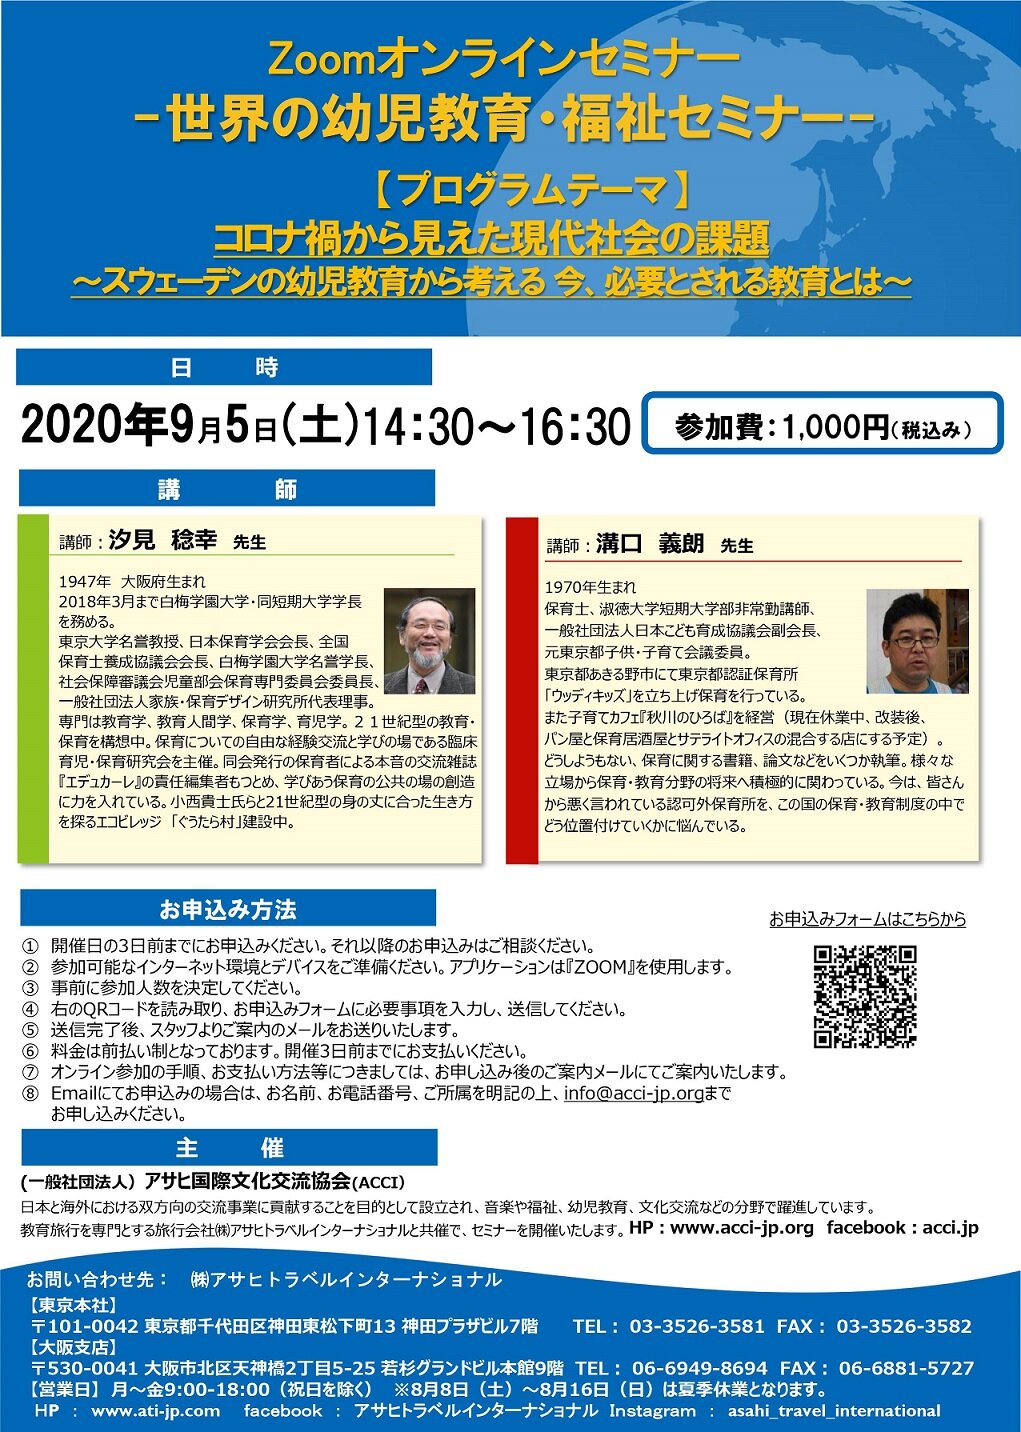 https://www.ati-jp.com/news/onlineSeminar20200806Resize.jpg